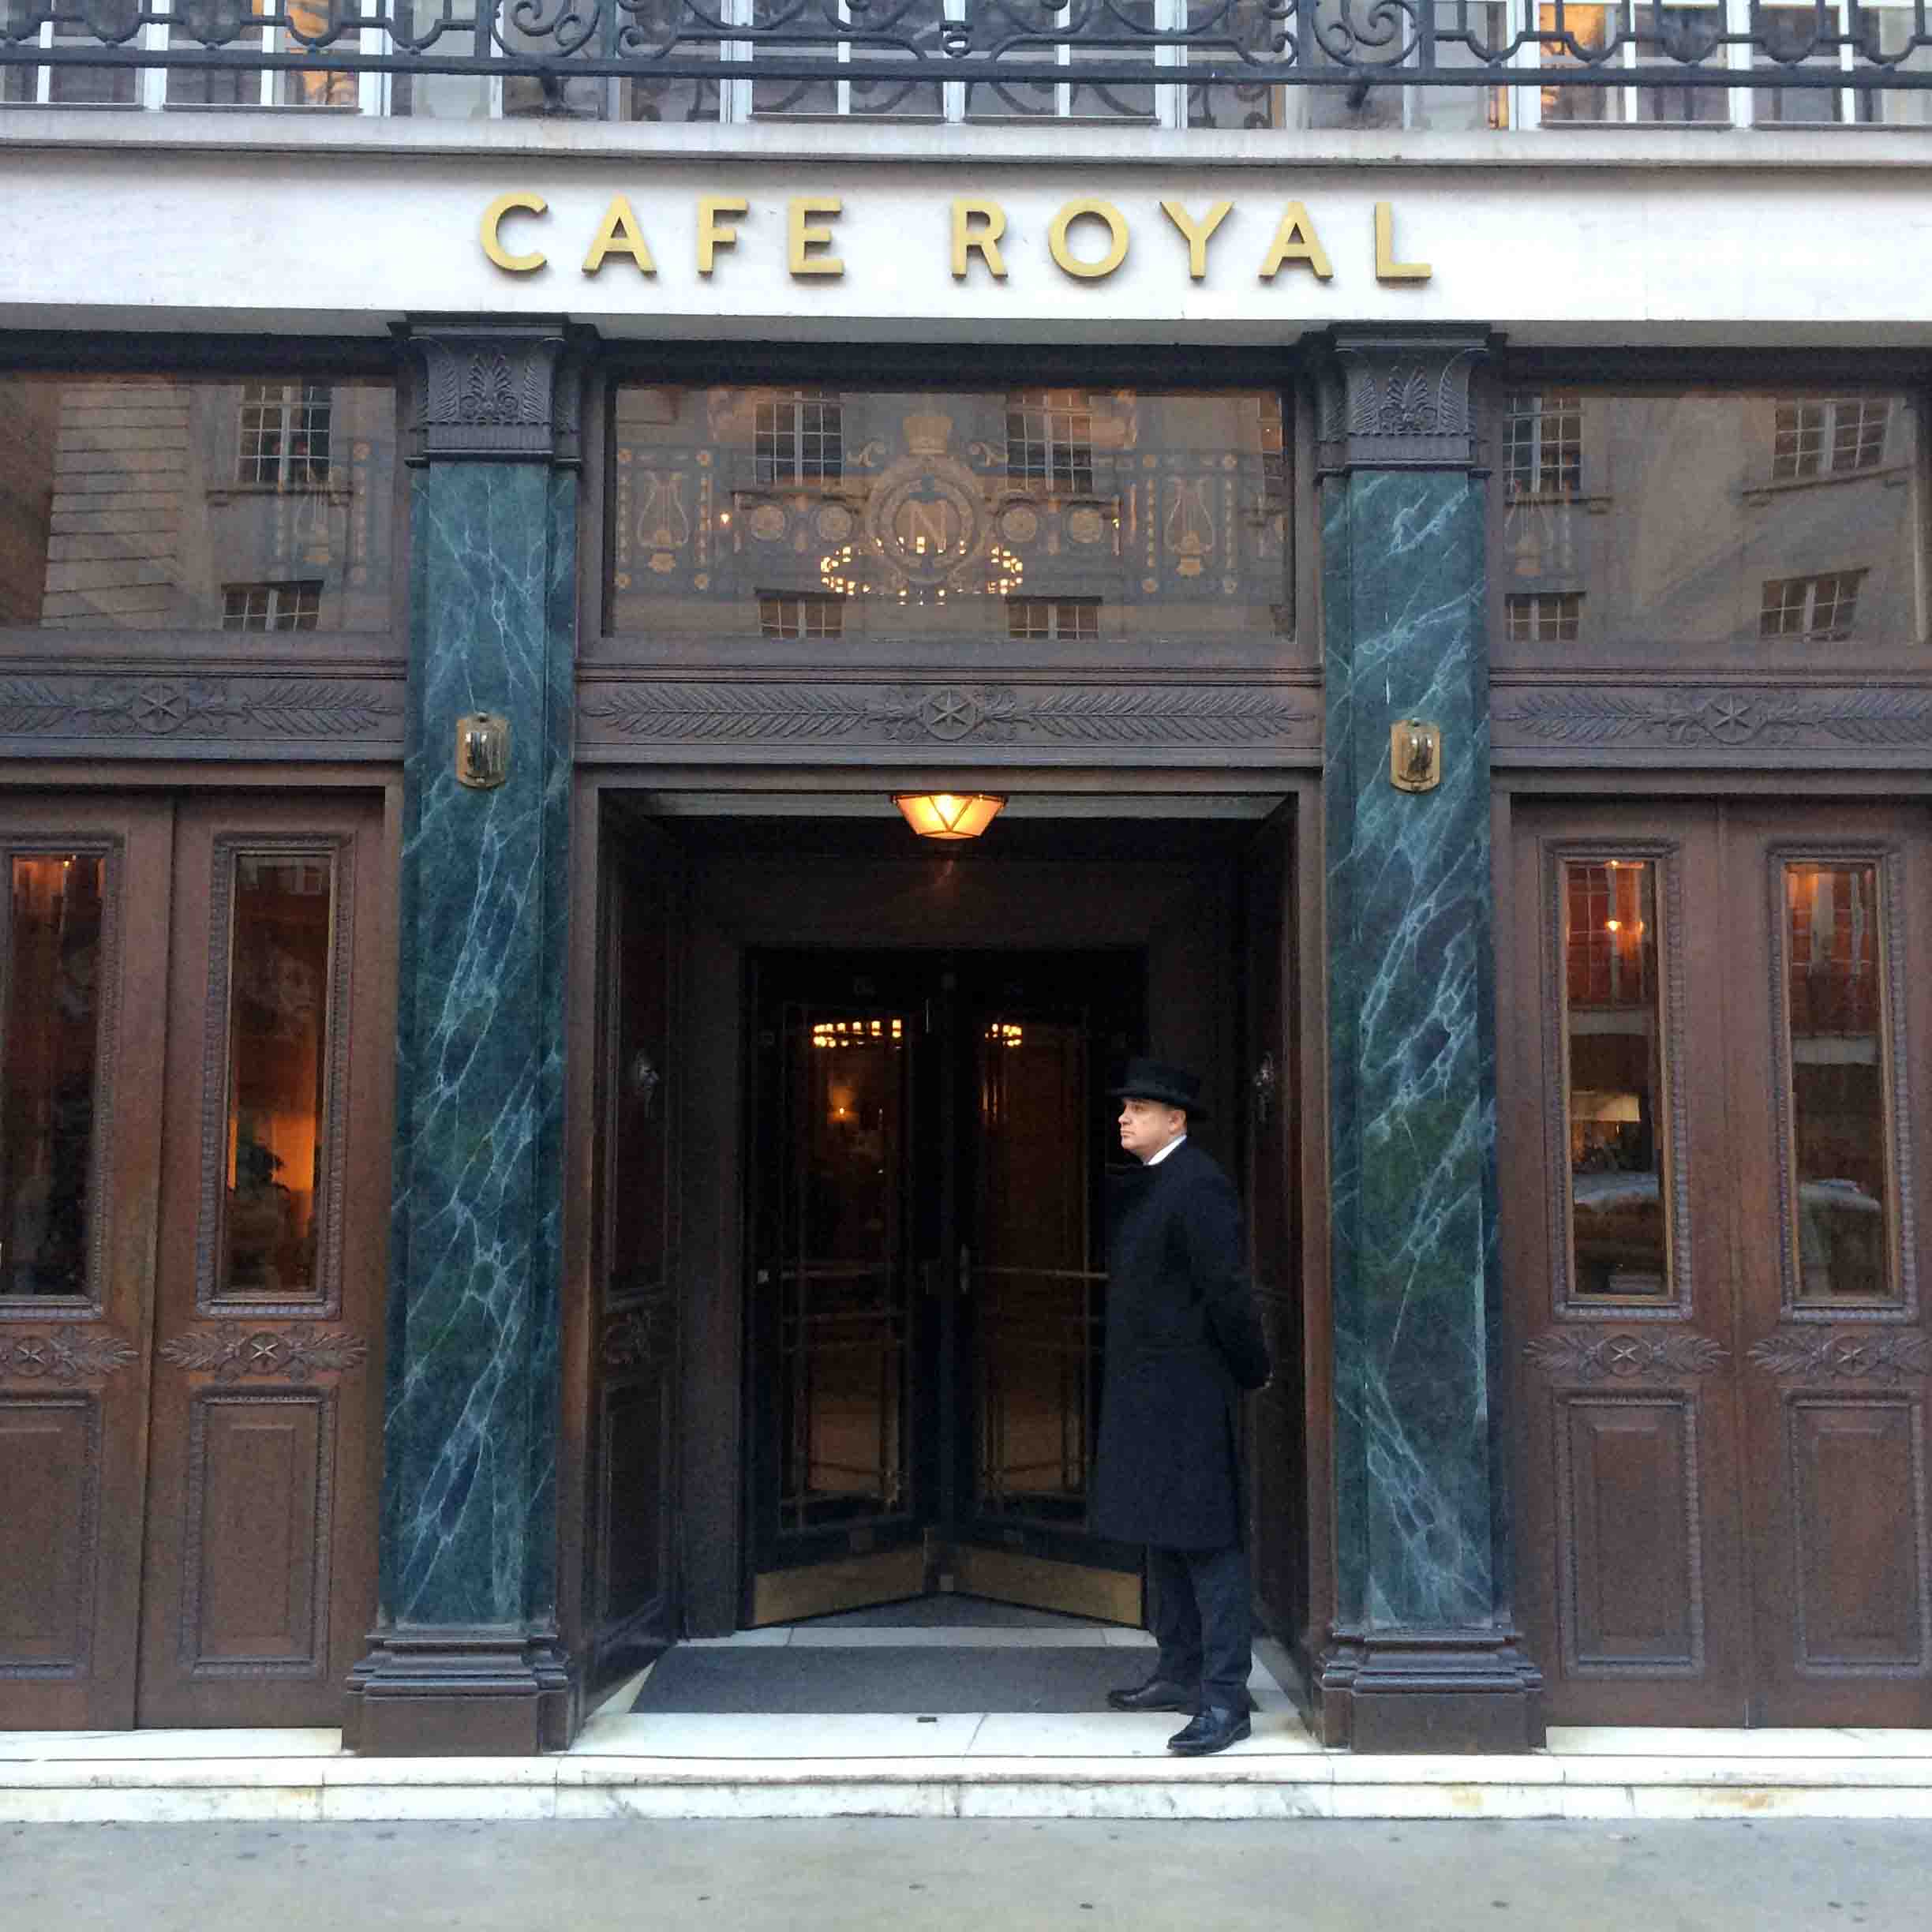 Hotel Cafe Royal & Winter Wonderland in London, England